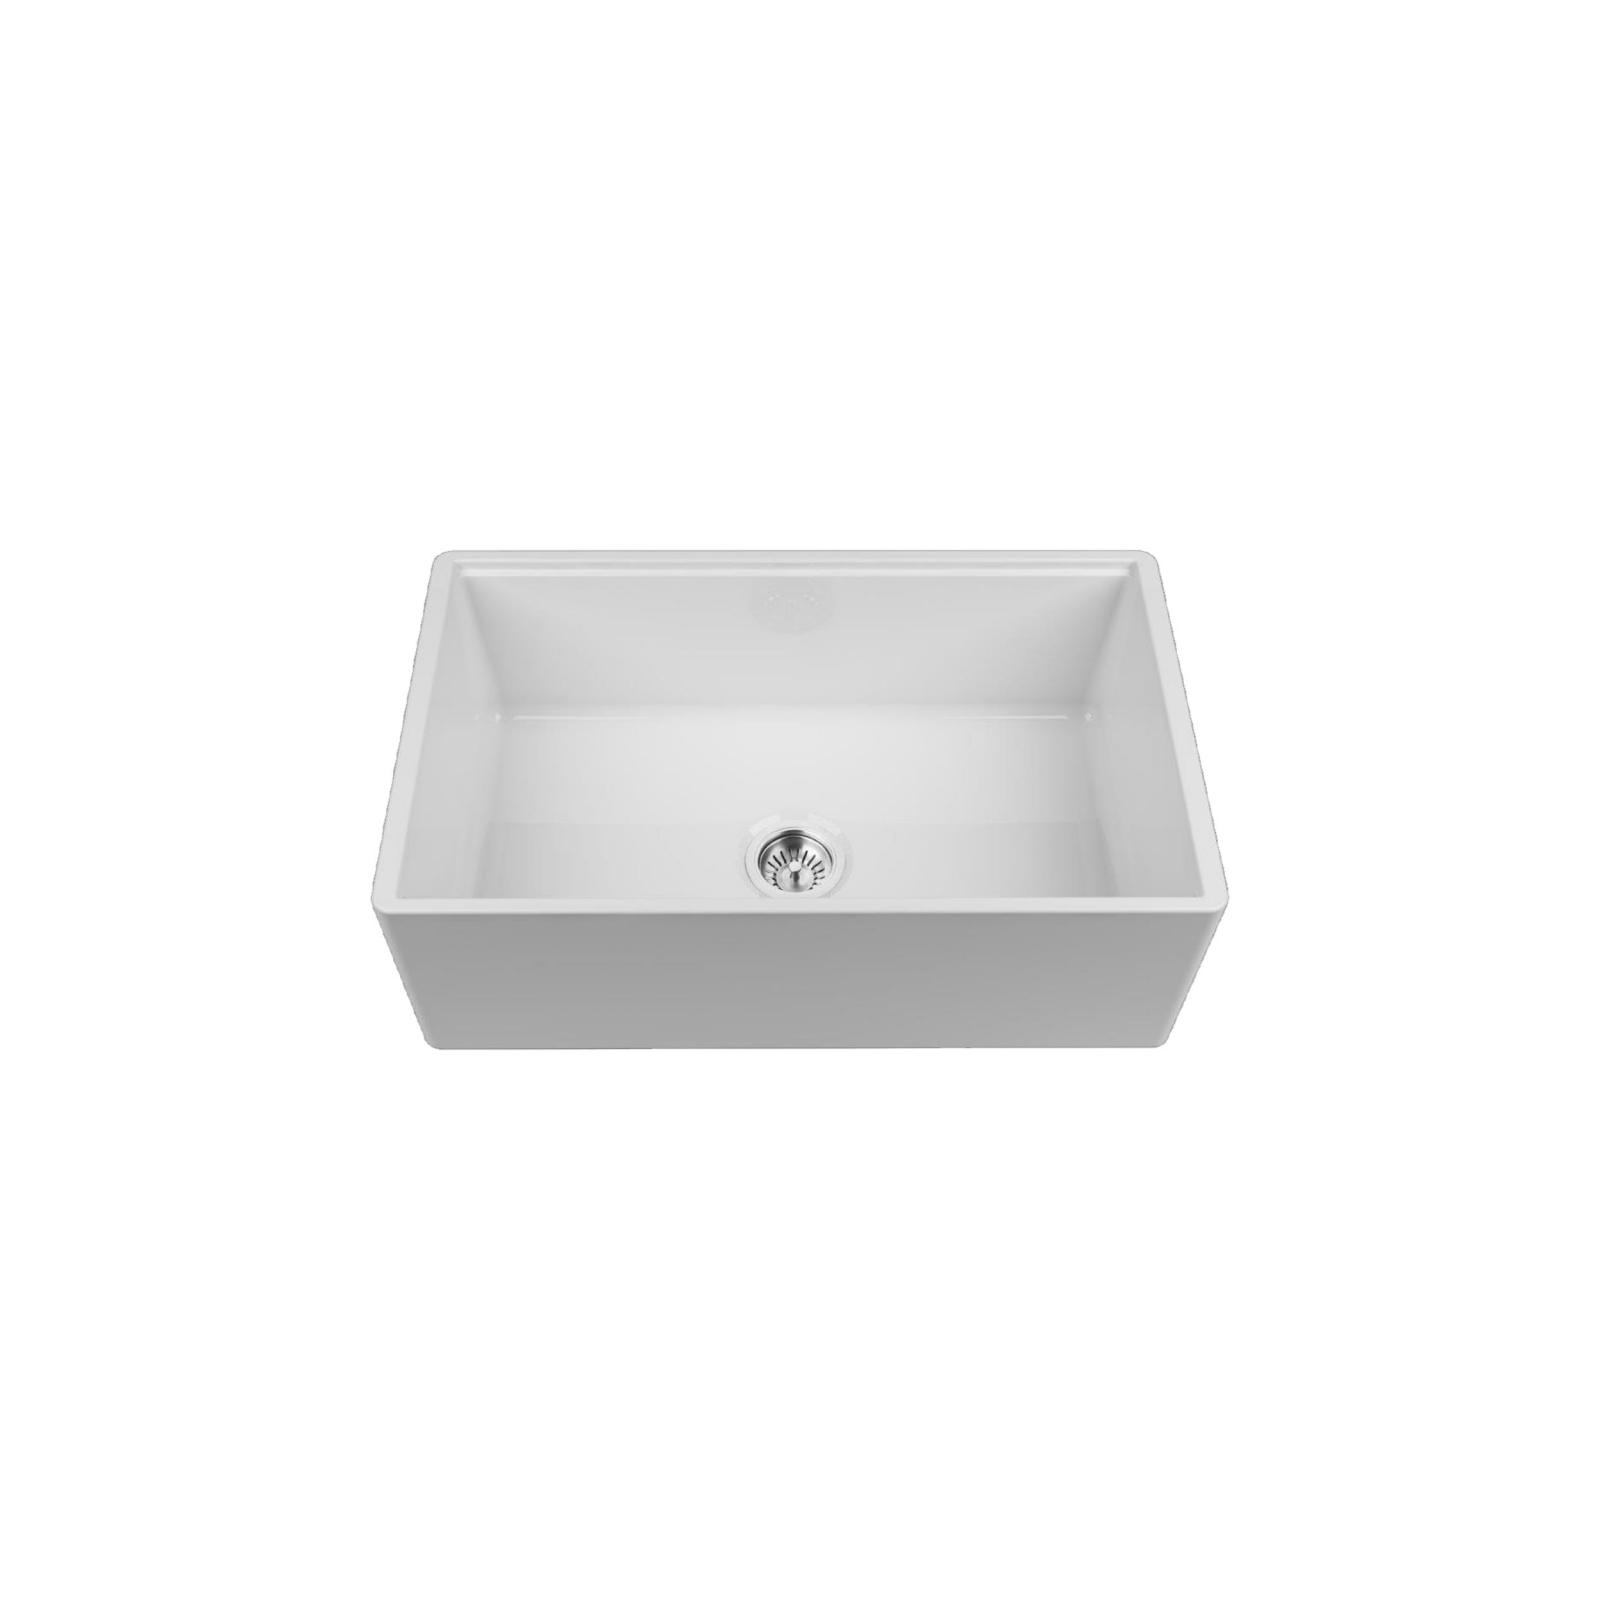 High-quality sink Louis Le Grand I - single bowl, ceramic - 2